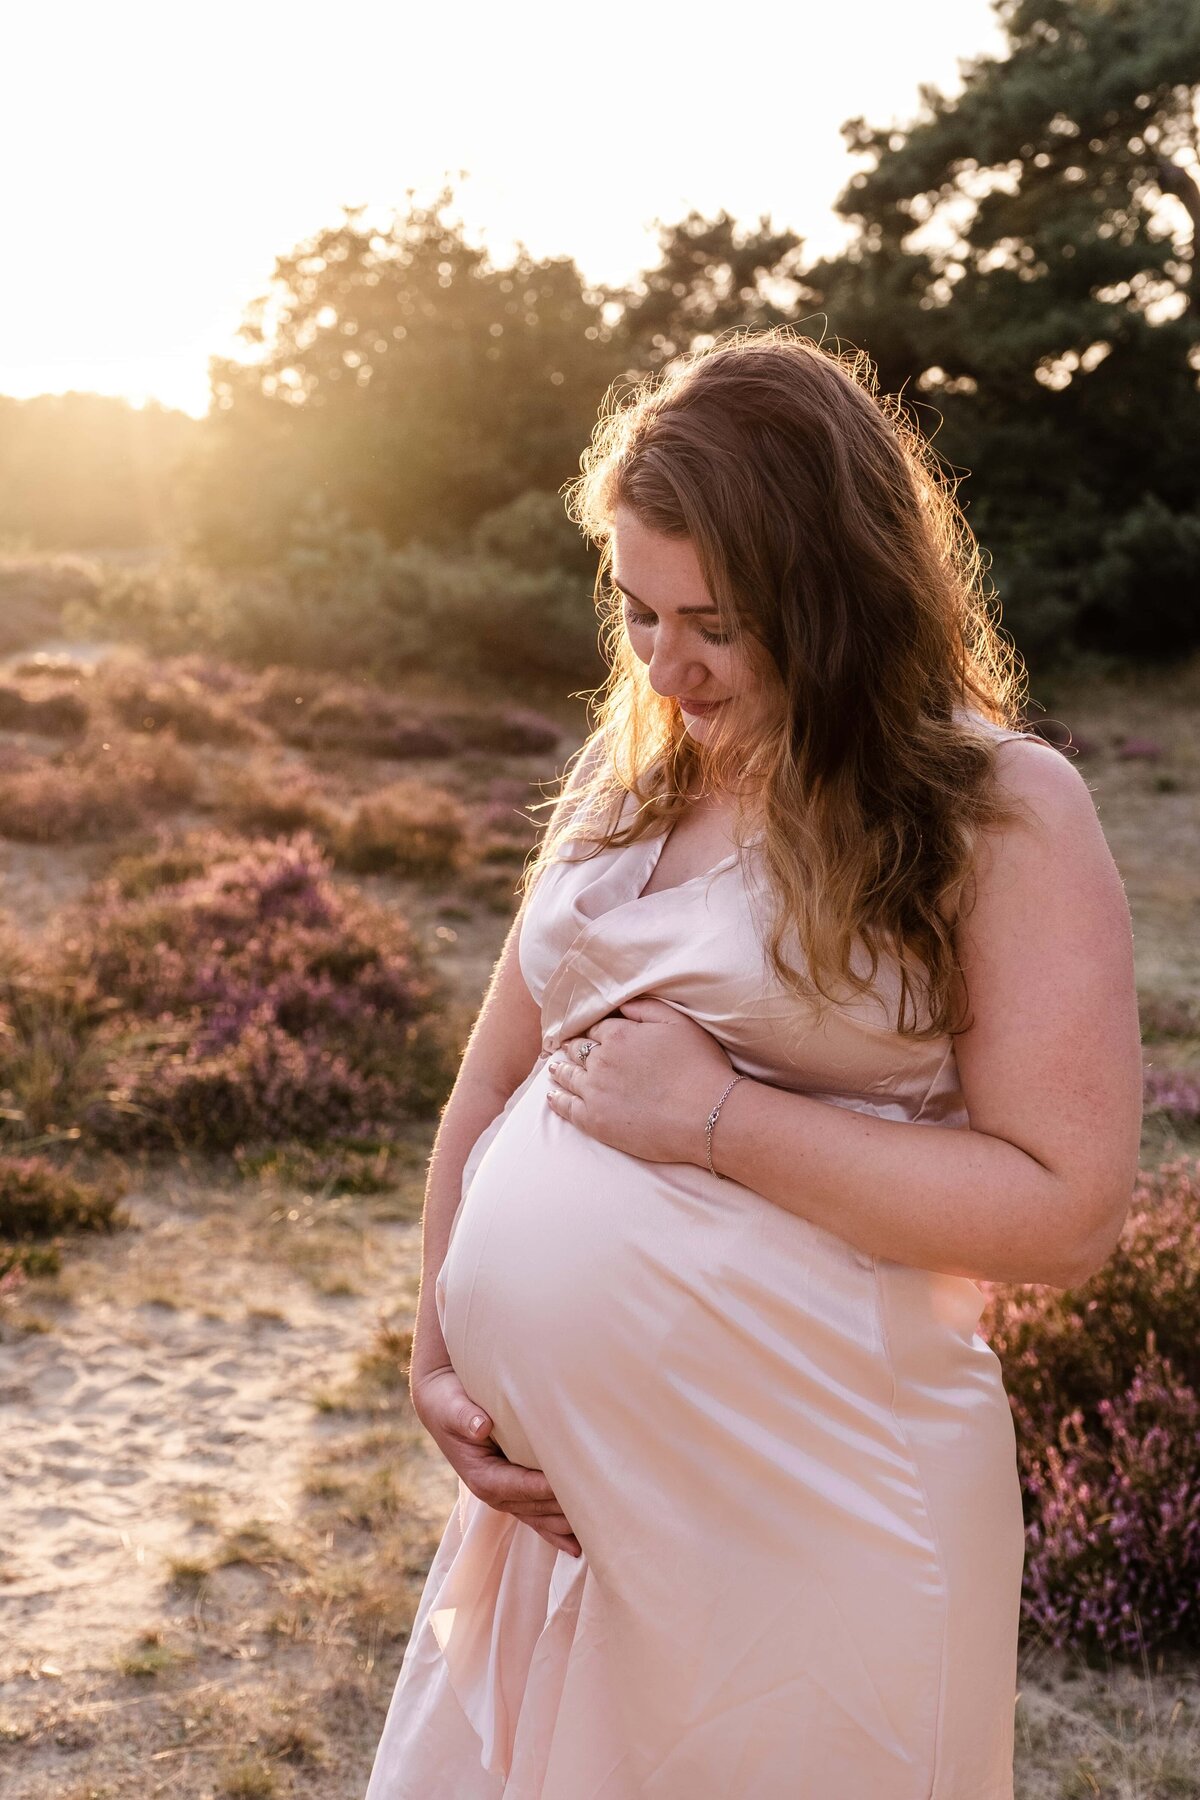 zwangerschapsshoot Groningen - zwangere vrouw tijdens zonsondergang.